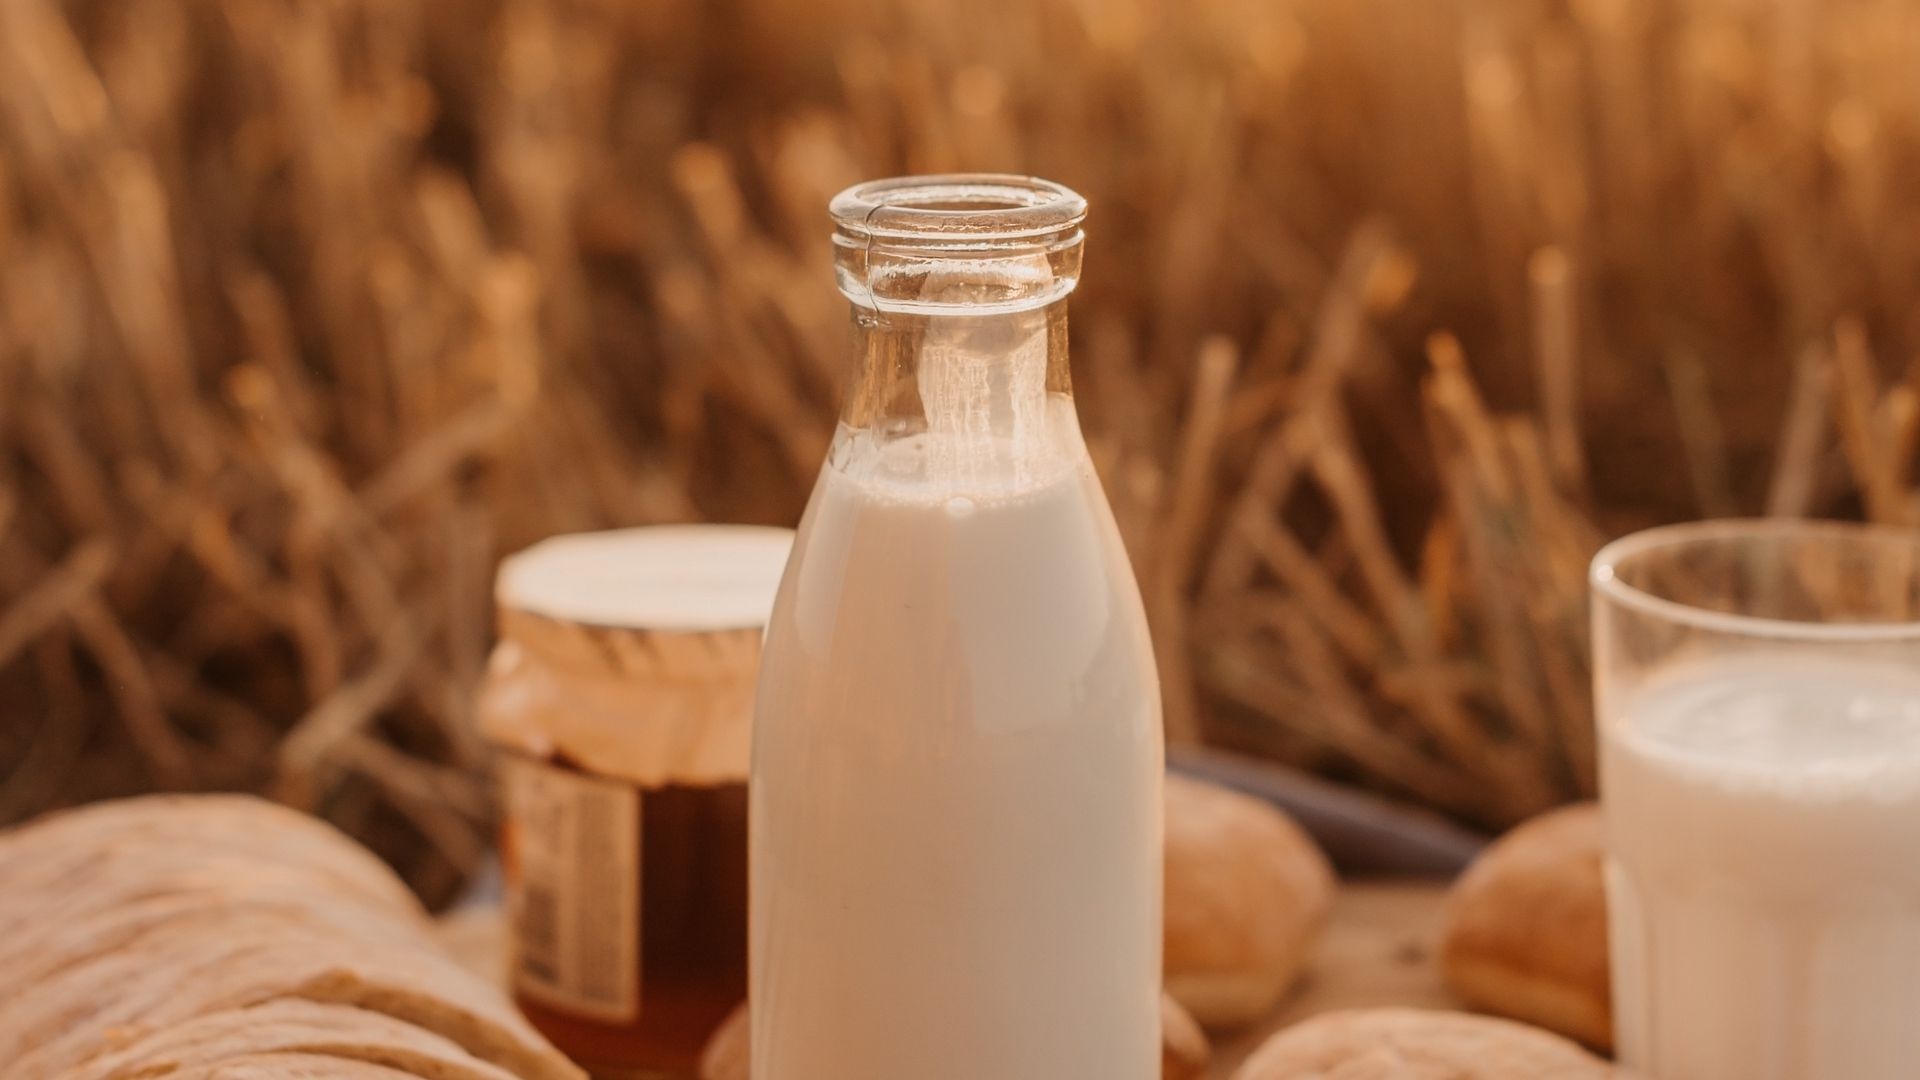 Milk: Dairy farming, Fermented to produce yogurt, kefir, or buttermilk. 1920x1080 Full HD Wallpaper.